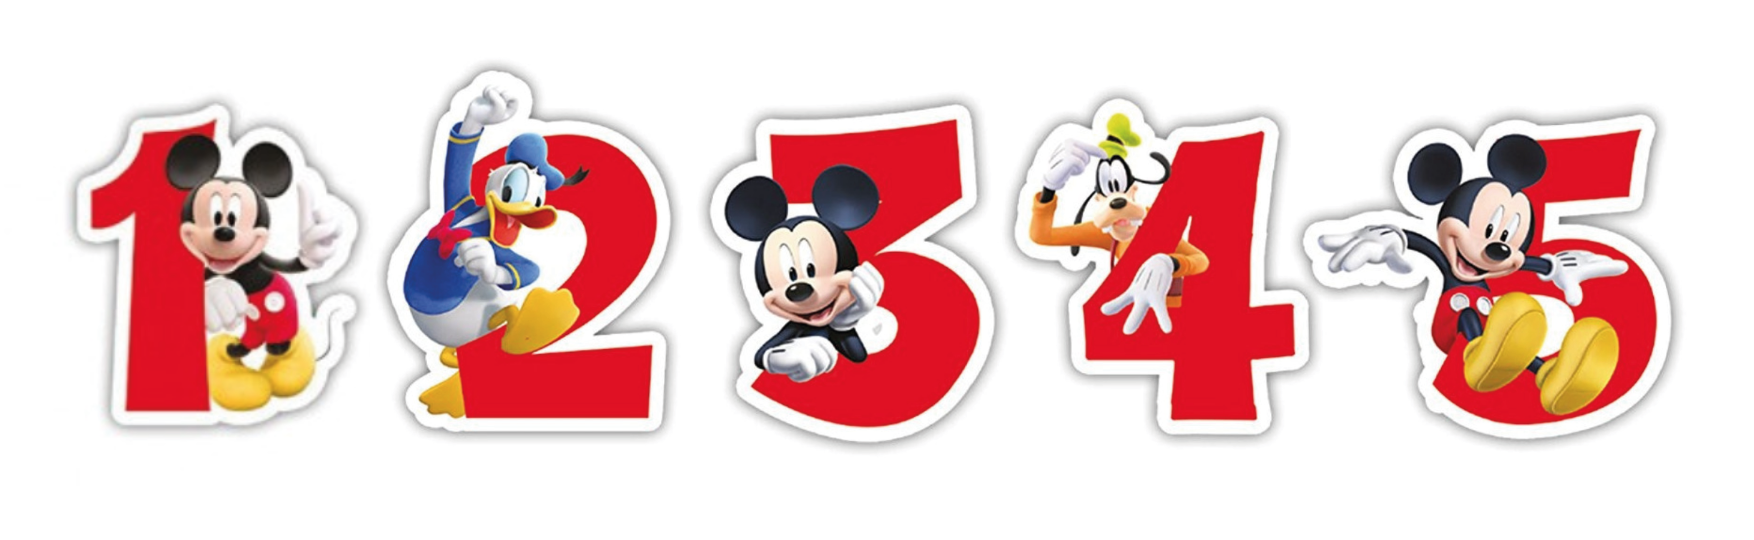 Mickey mouse kagelys, kagelys med Mickey mouse, Kagelys med Anders And, Disney kagelys, Kagelys til børnefødselsdag,